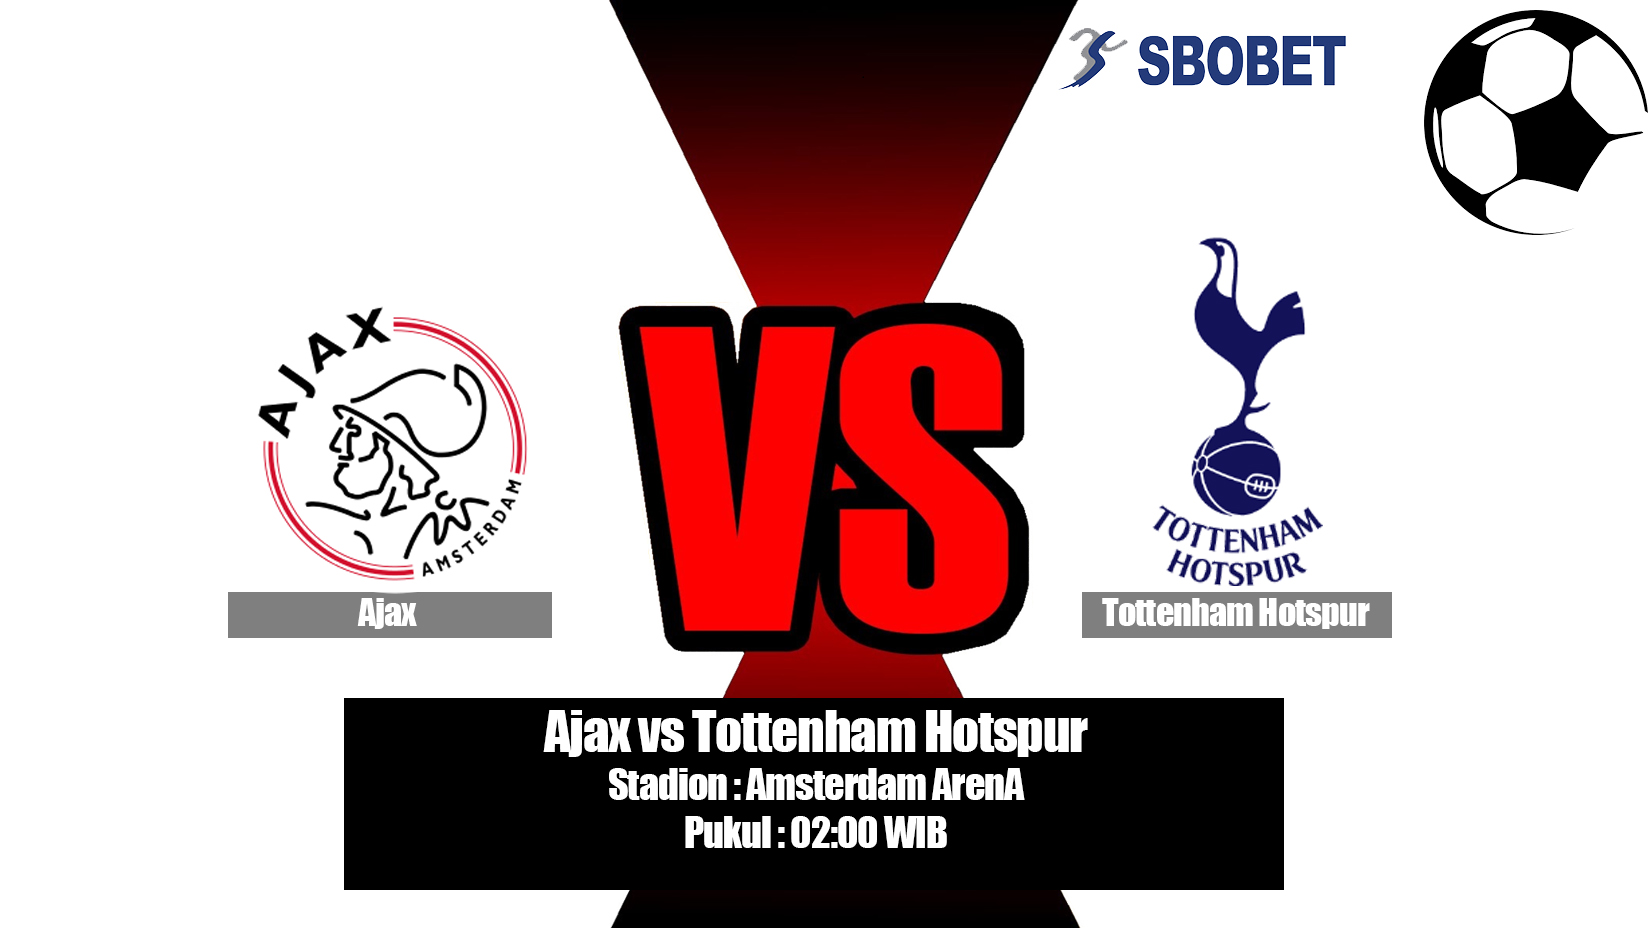 Prediksi Bola Ajax vs Tottenham Hotspur 9 Mei 2019